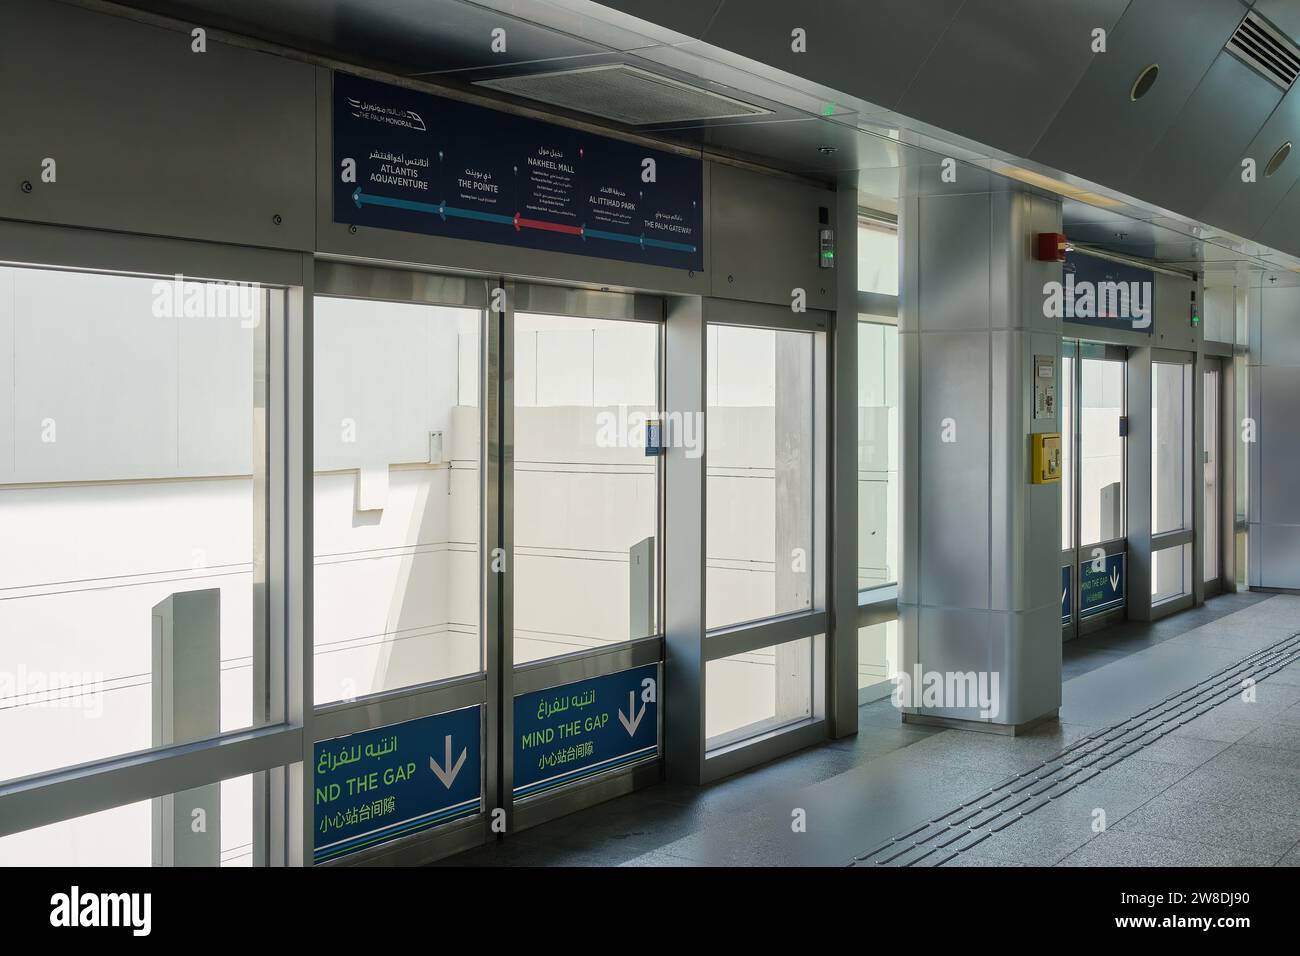 Nakheel Mall Station platform for Palm Jumeirah Monorail to Atlantis Aquaventure, Dubai, United Arab Emirates Stock Photo